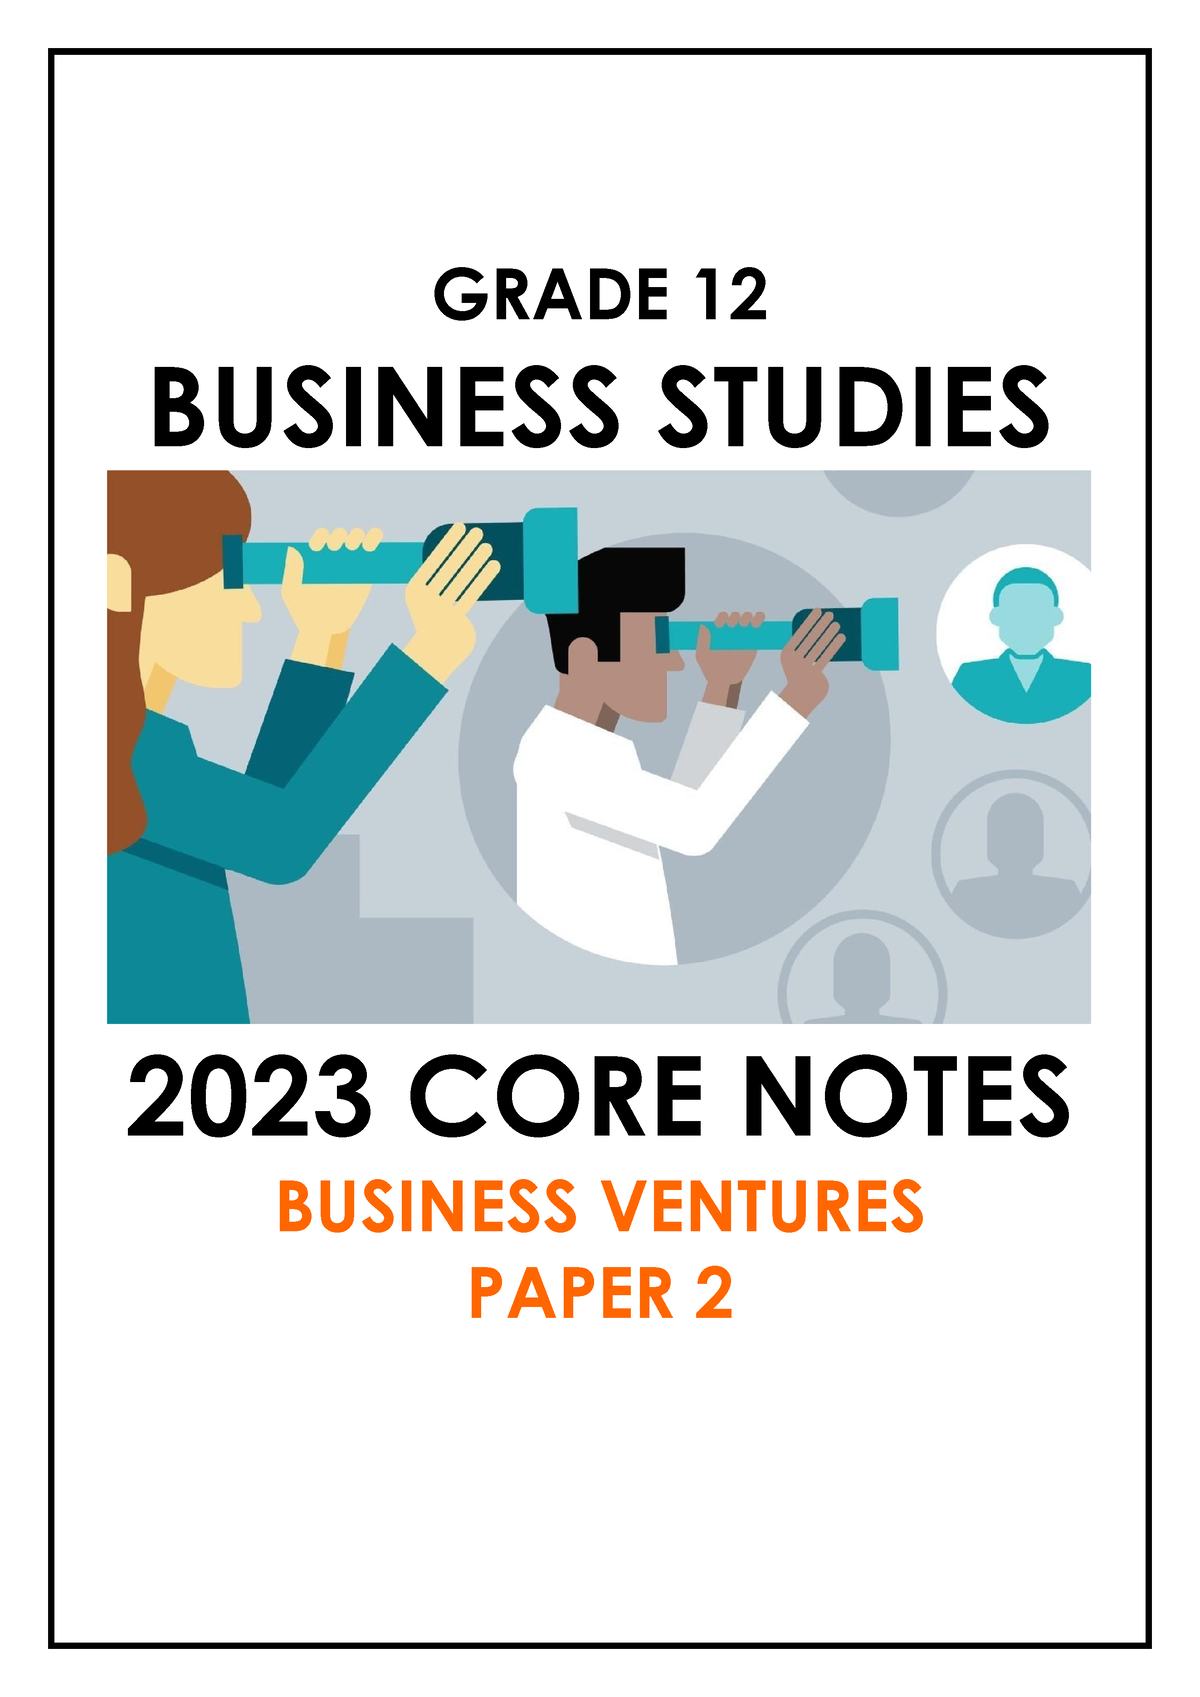 business studies essay on business ventures